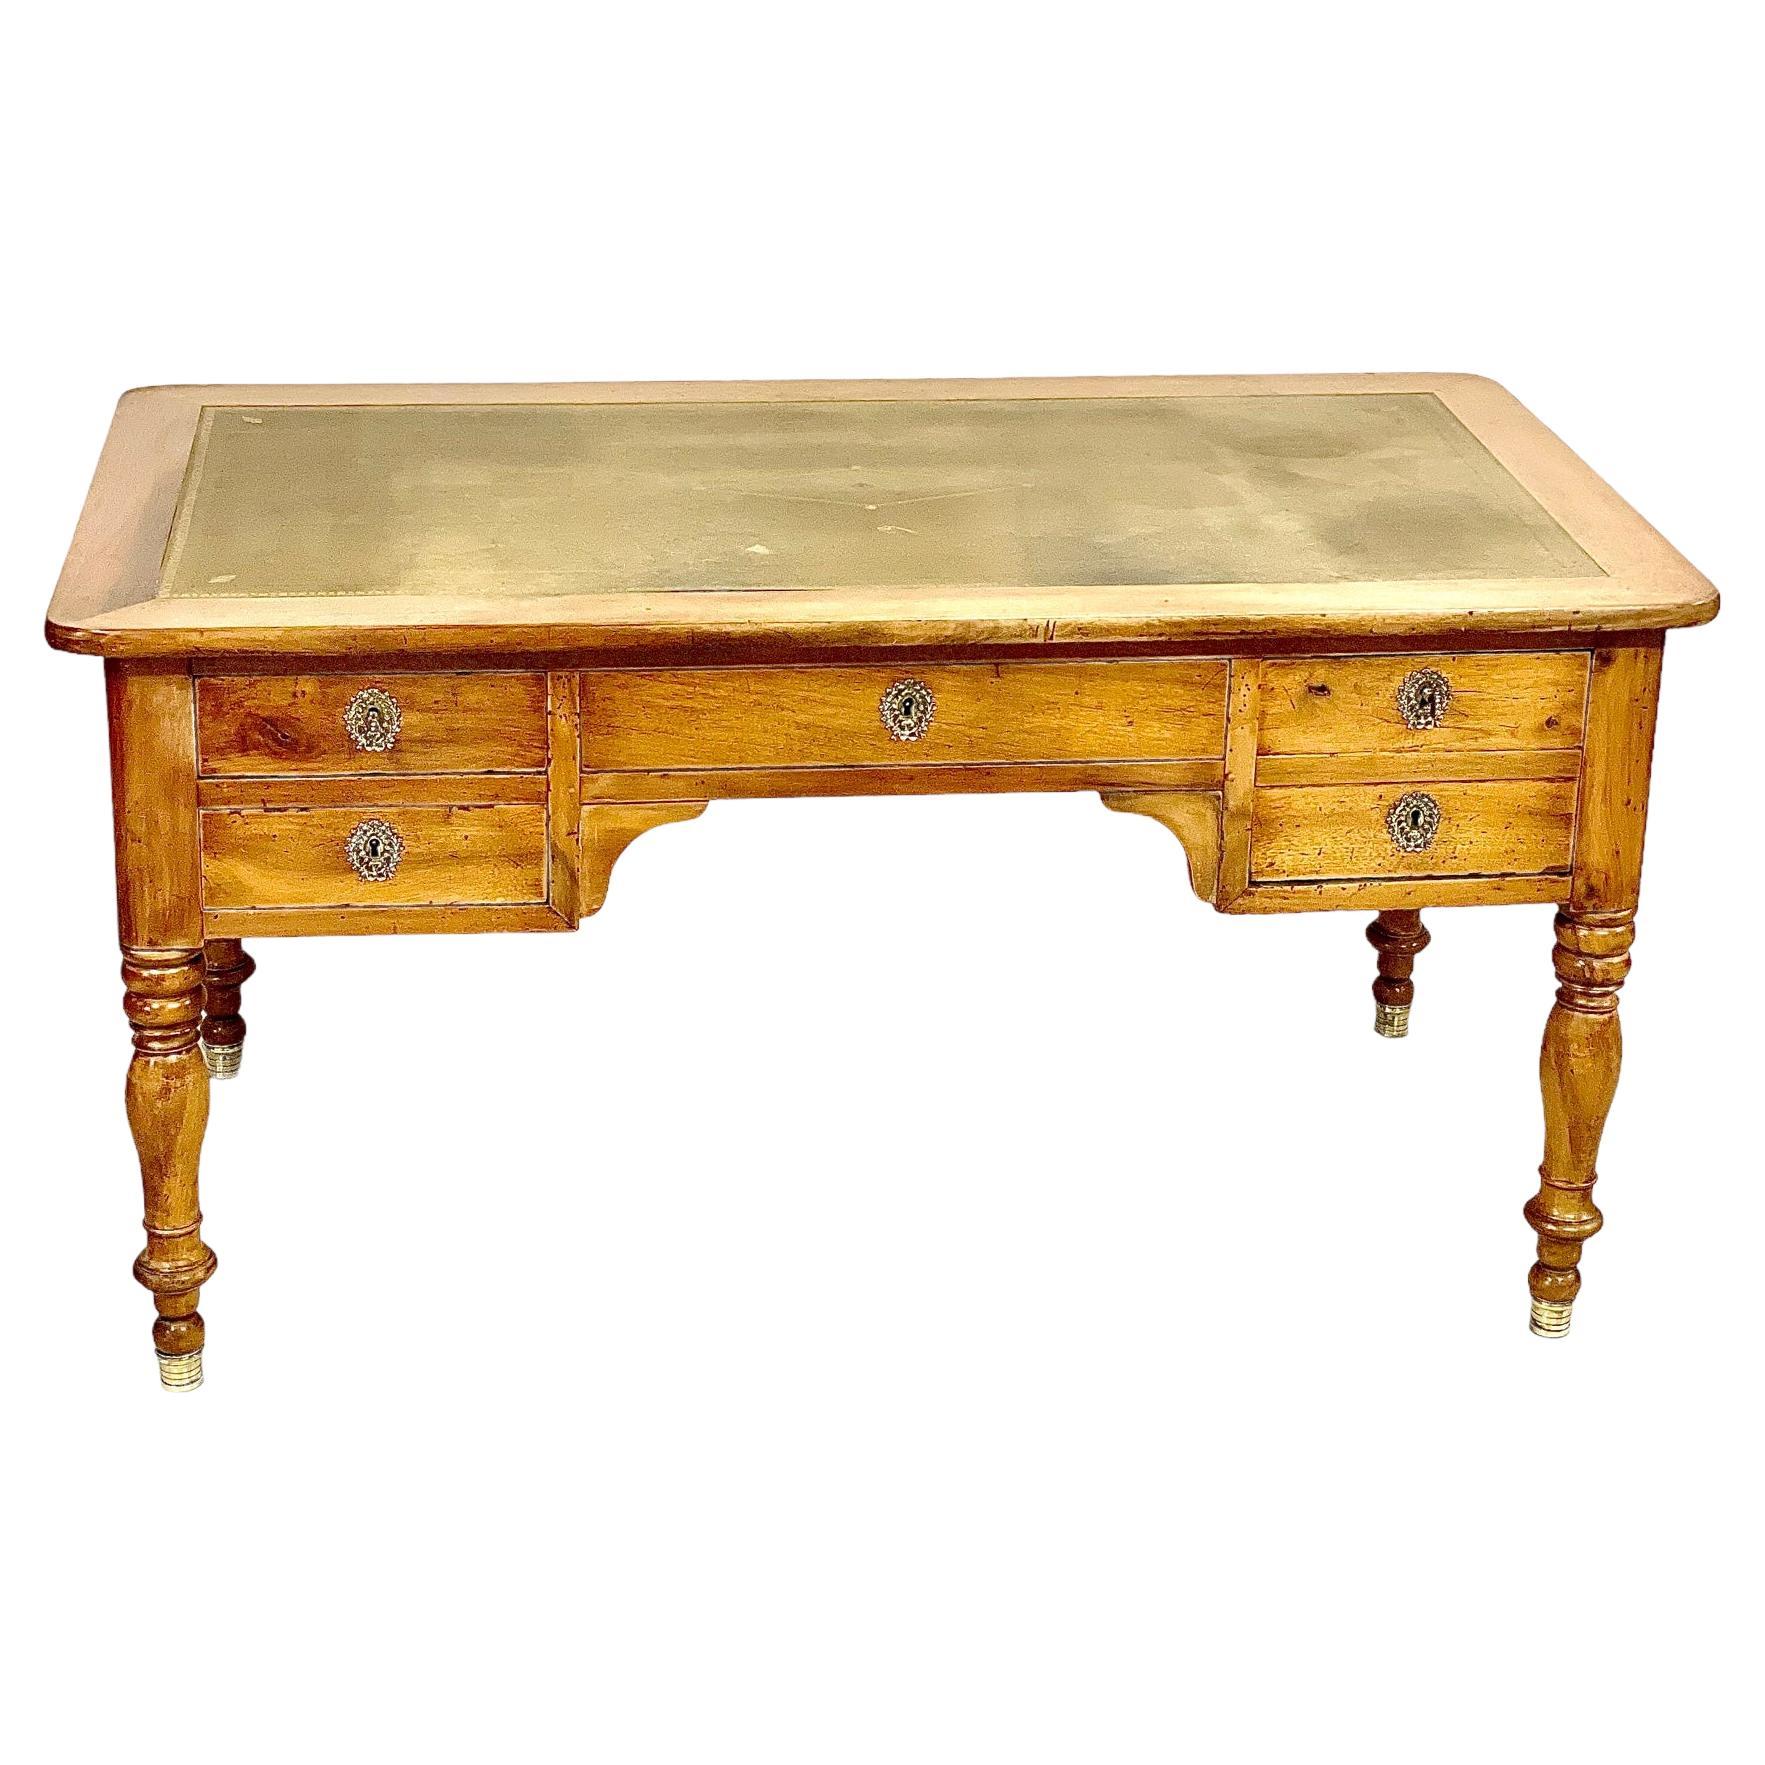 19th Century Wooden Partners' Desk